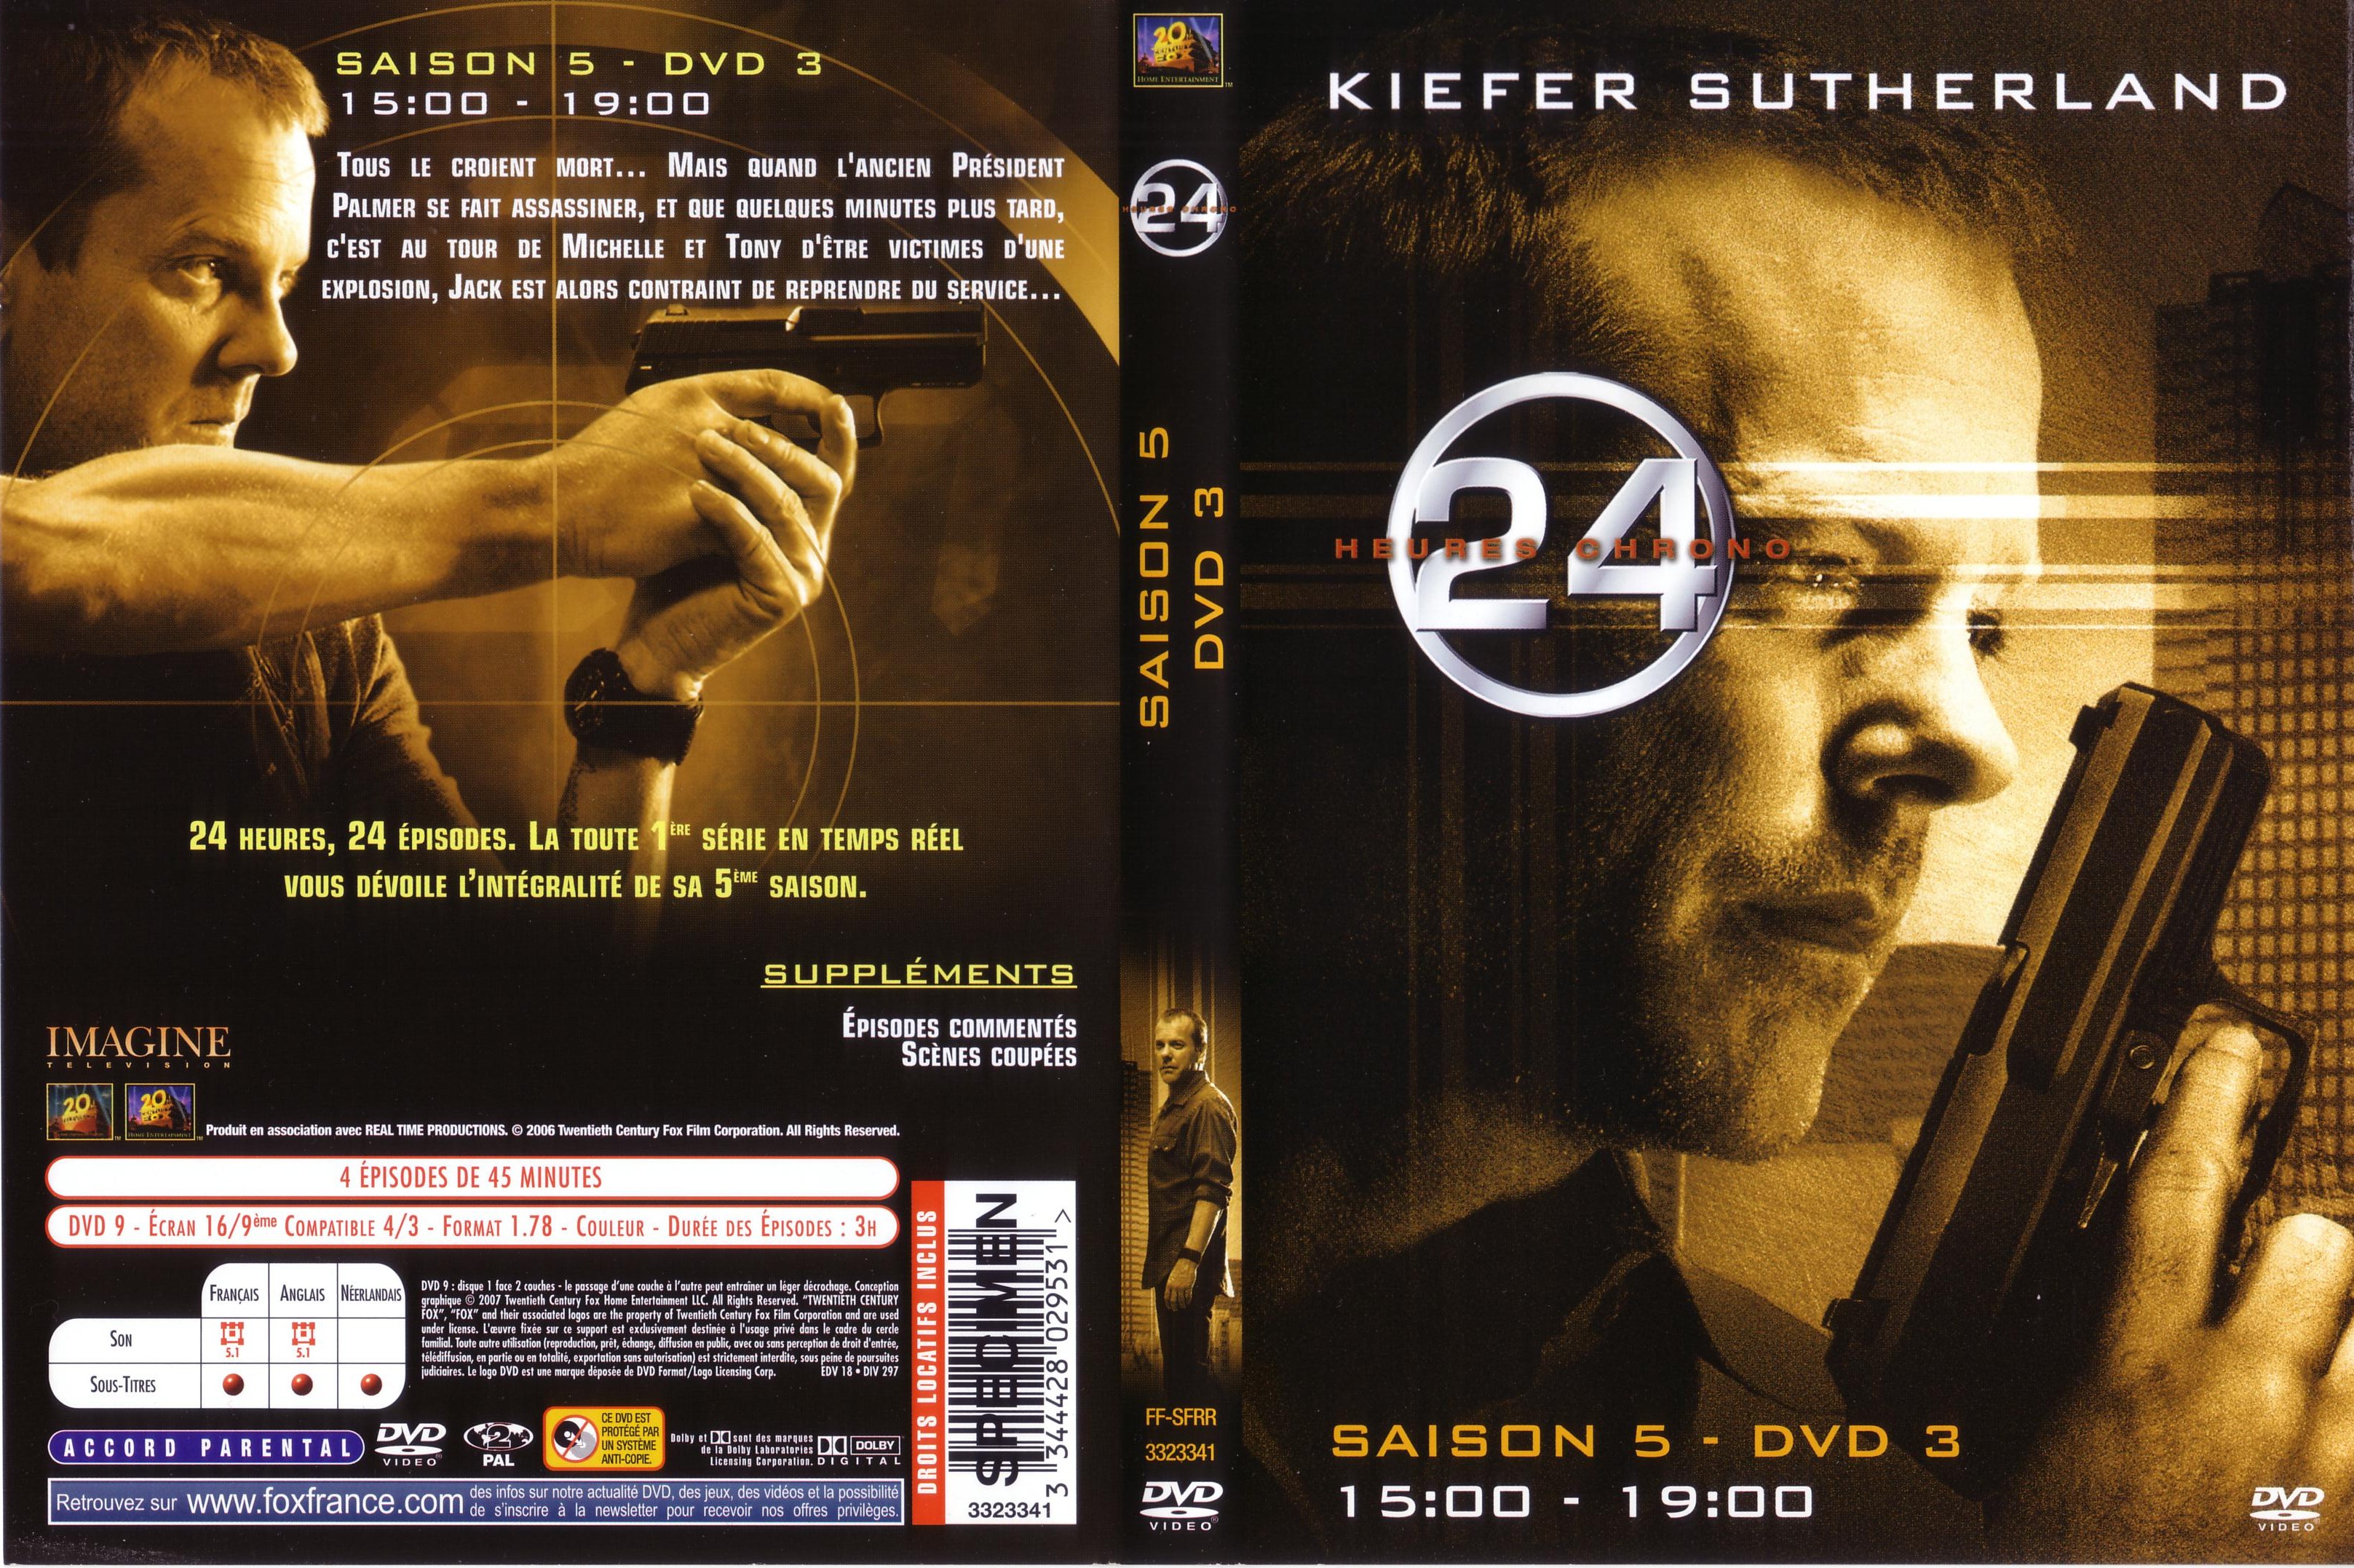 Jaquette DVD 24 heures chrono saison 5 DVD 3